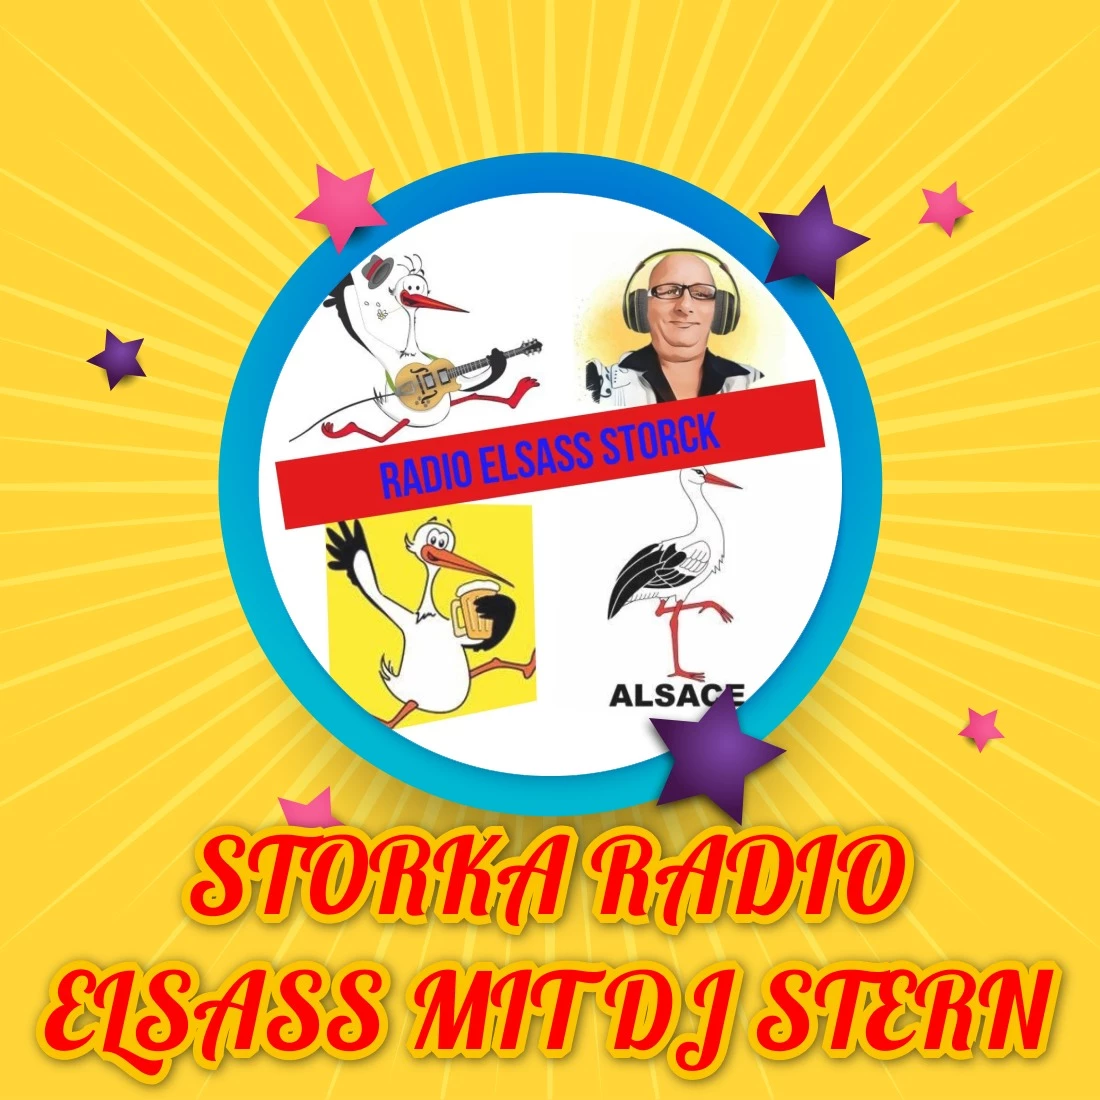 STORCKA ELSASS RADIO